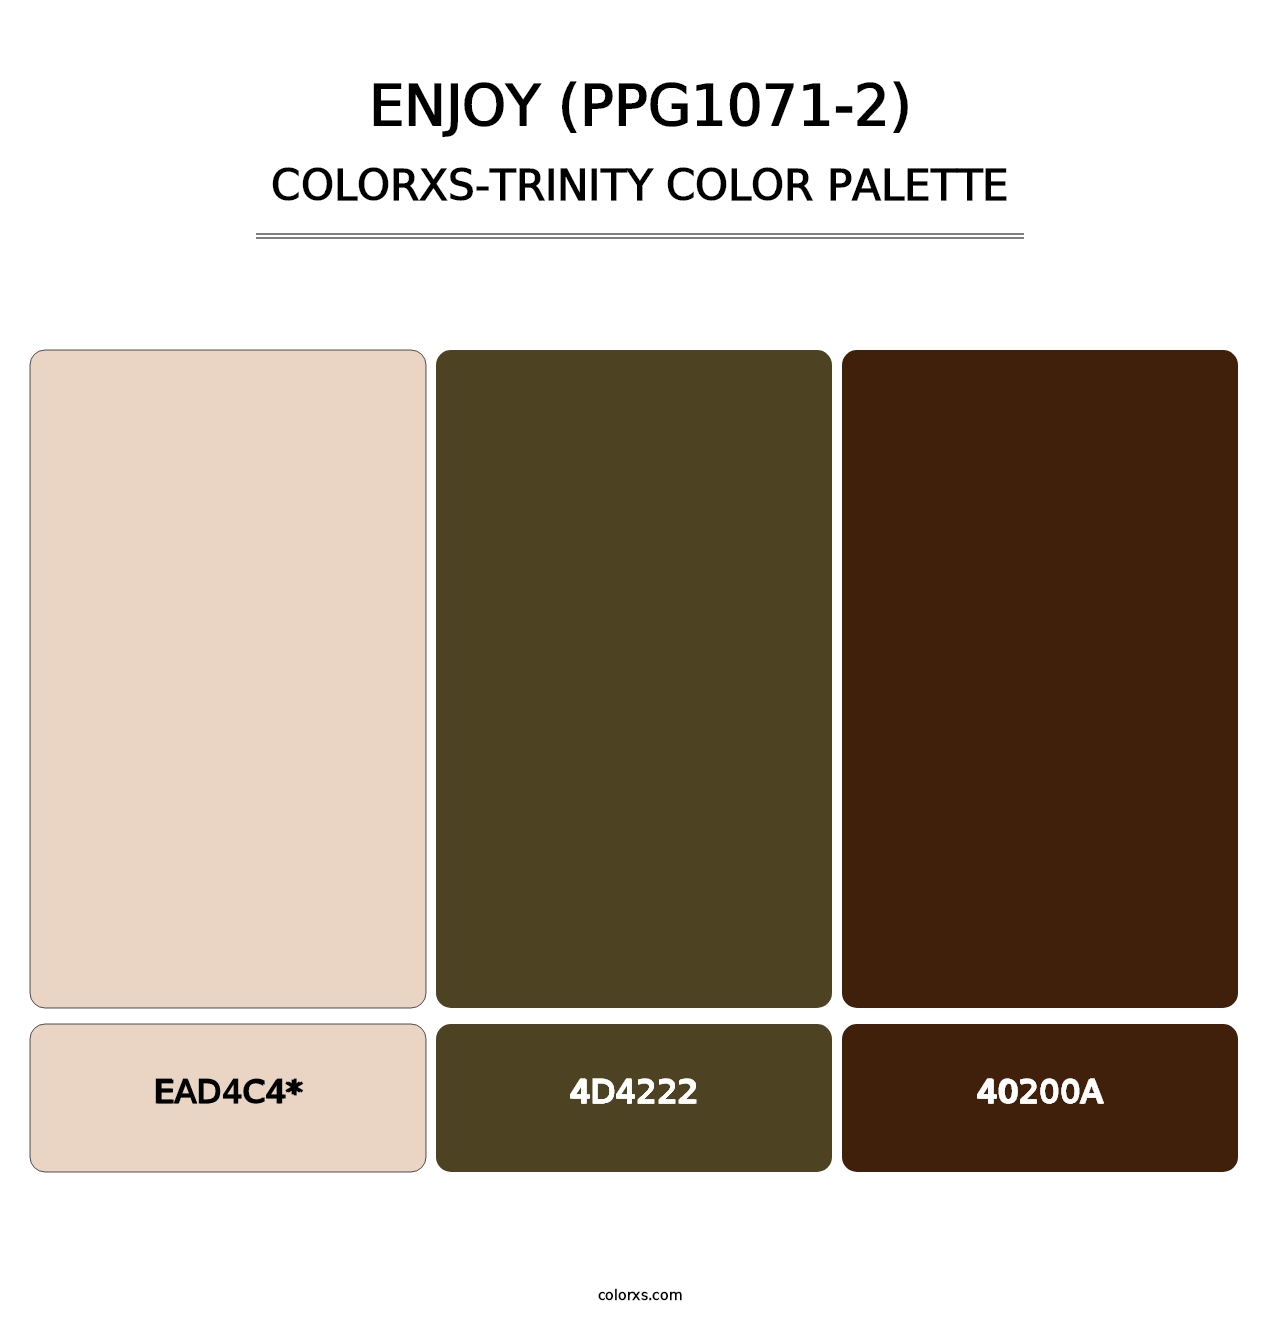 Enjoy (PPG1071-2) - Colorxs Trinity Palette